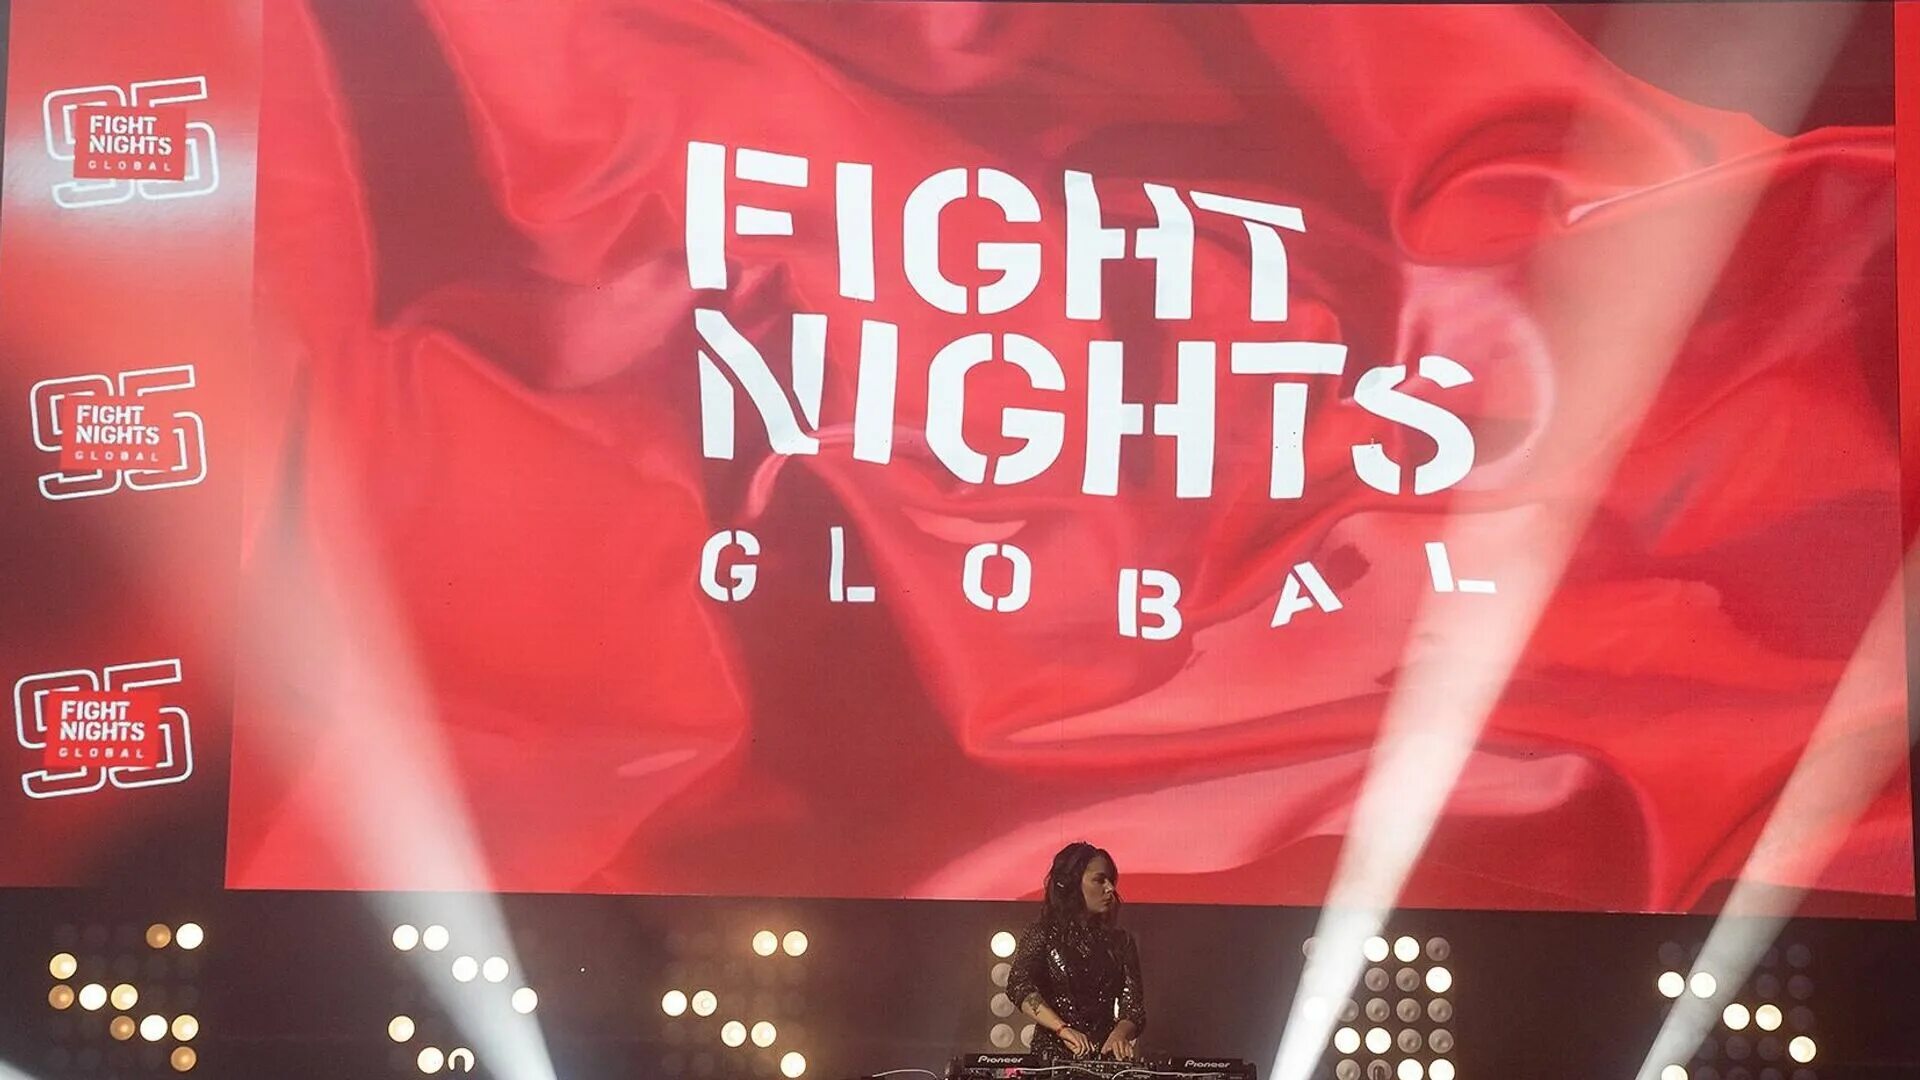 АМС файт Найт. AMC Fight Nights. Fight Night логотип. AMC Fight Nights Global.